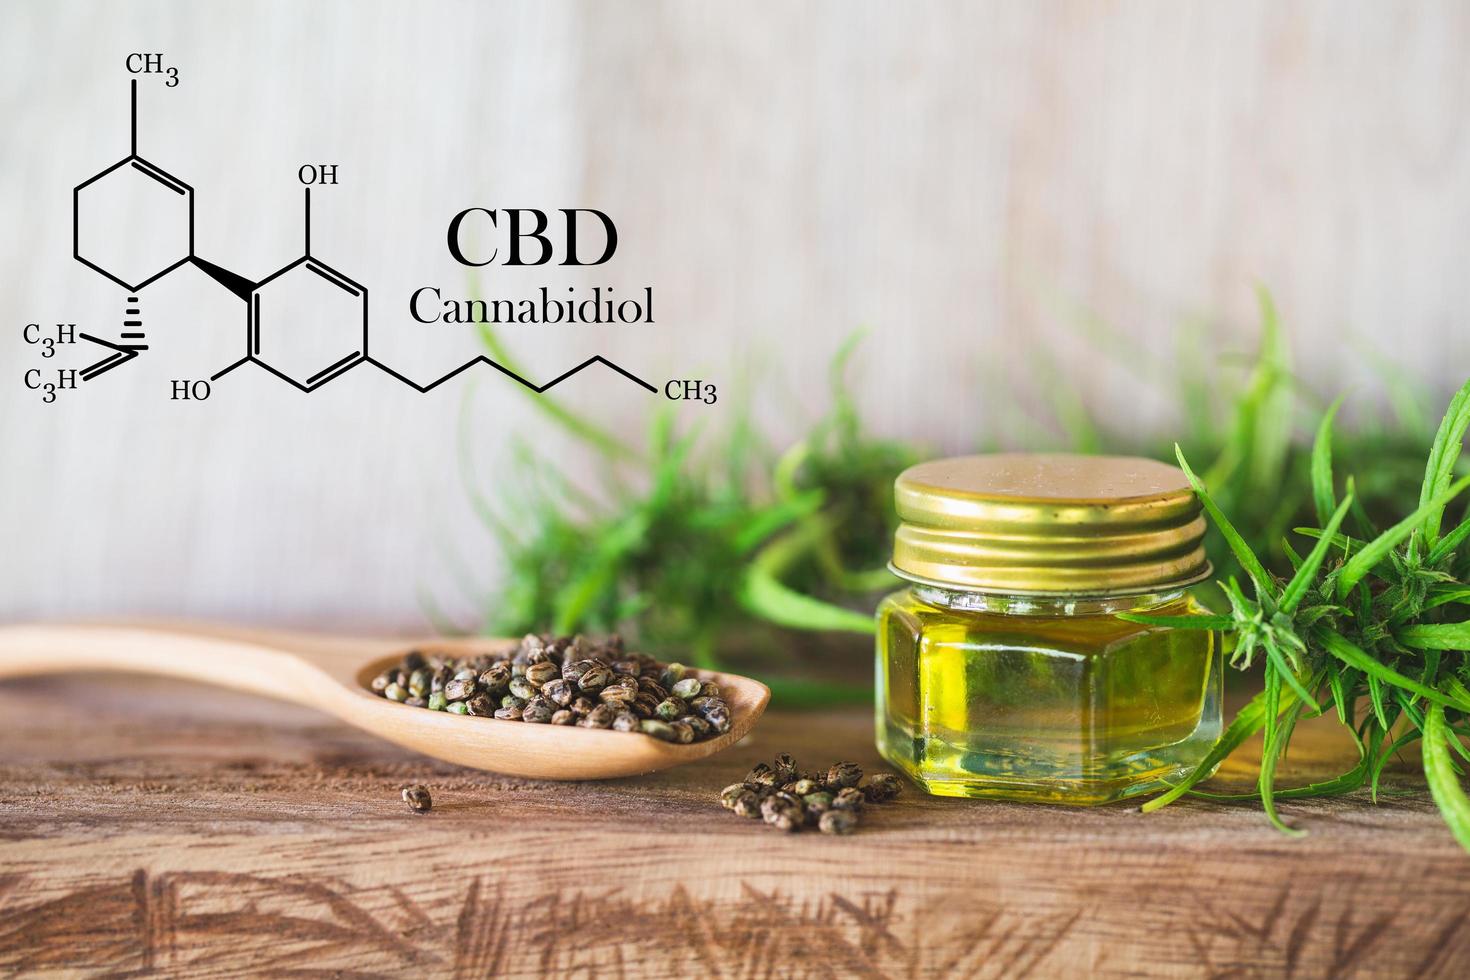 Cannabis of the formula CBD cannabidiol. hemp oil, CBD oil cannabis extract, Medical cannabis concept, photo